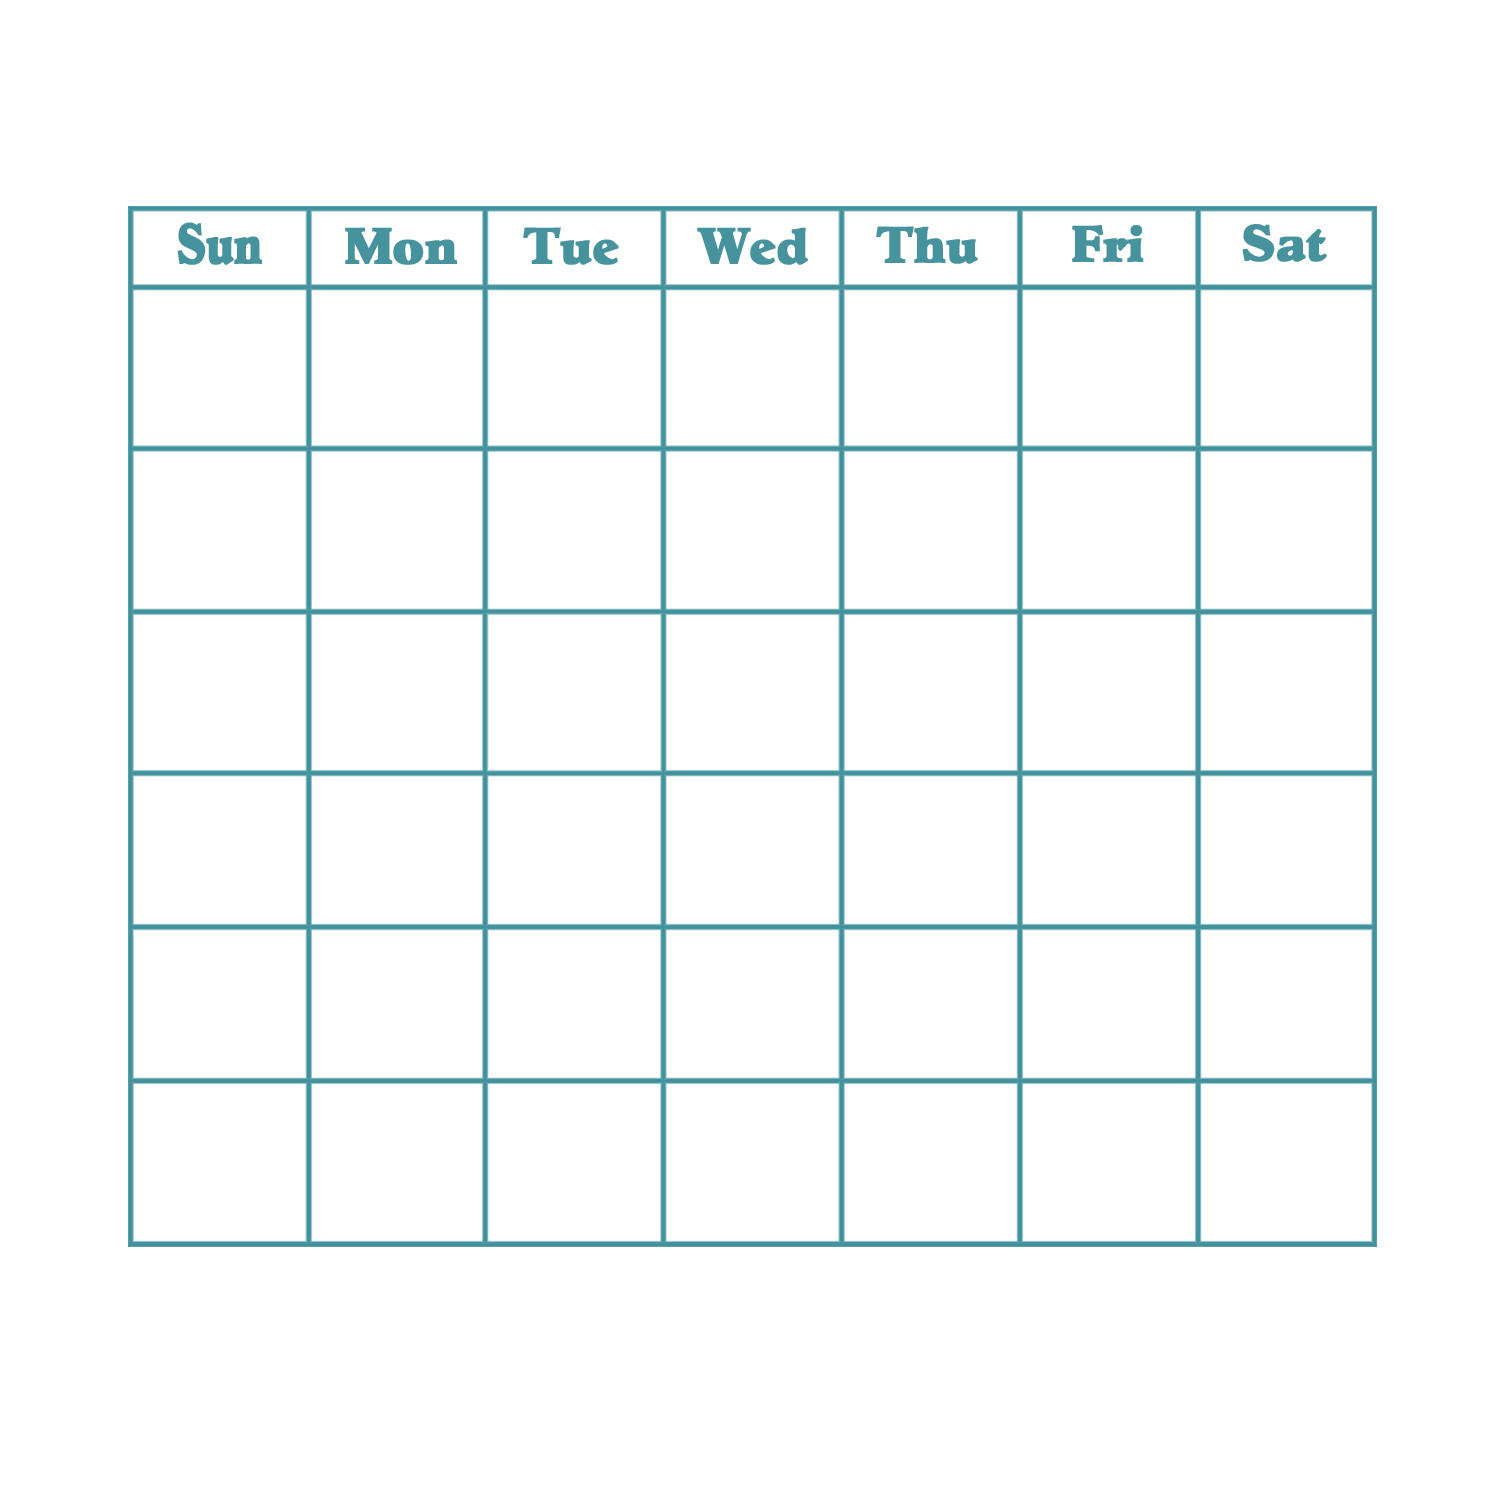 download the blue calendar grid here download the pink calendar